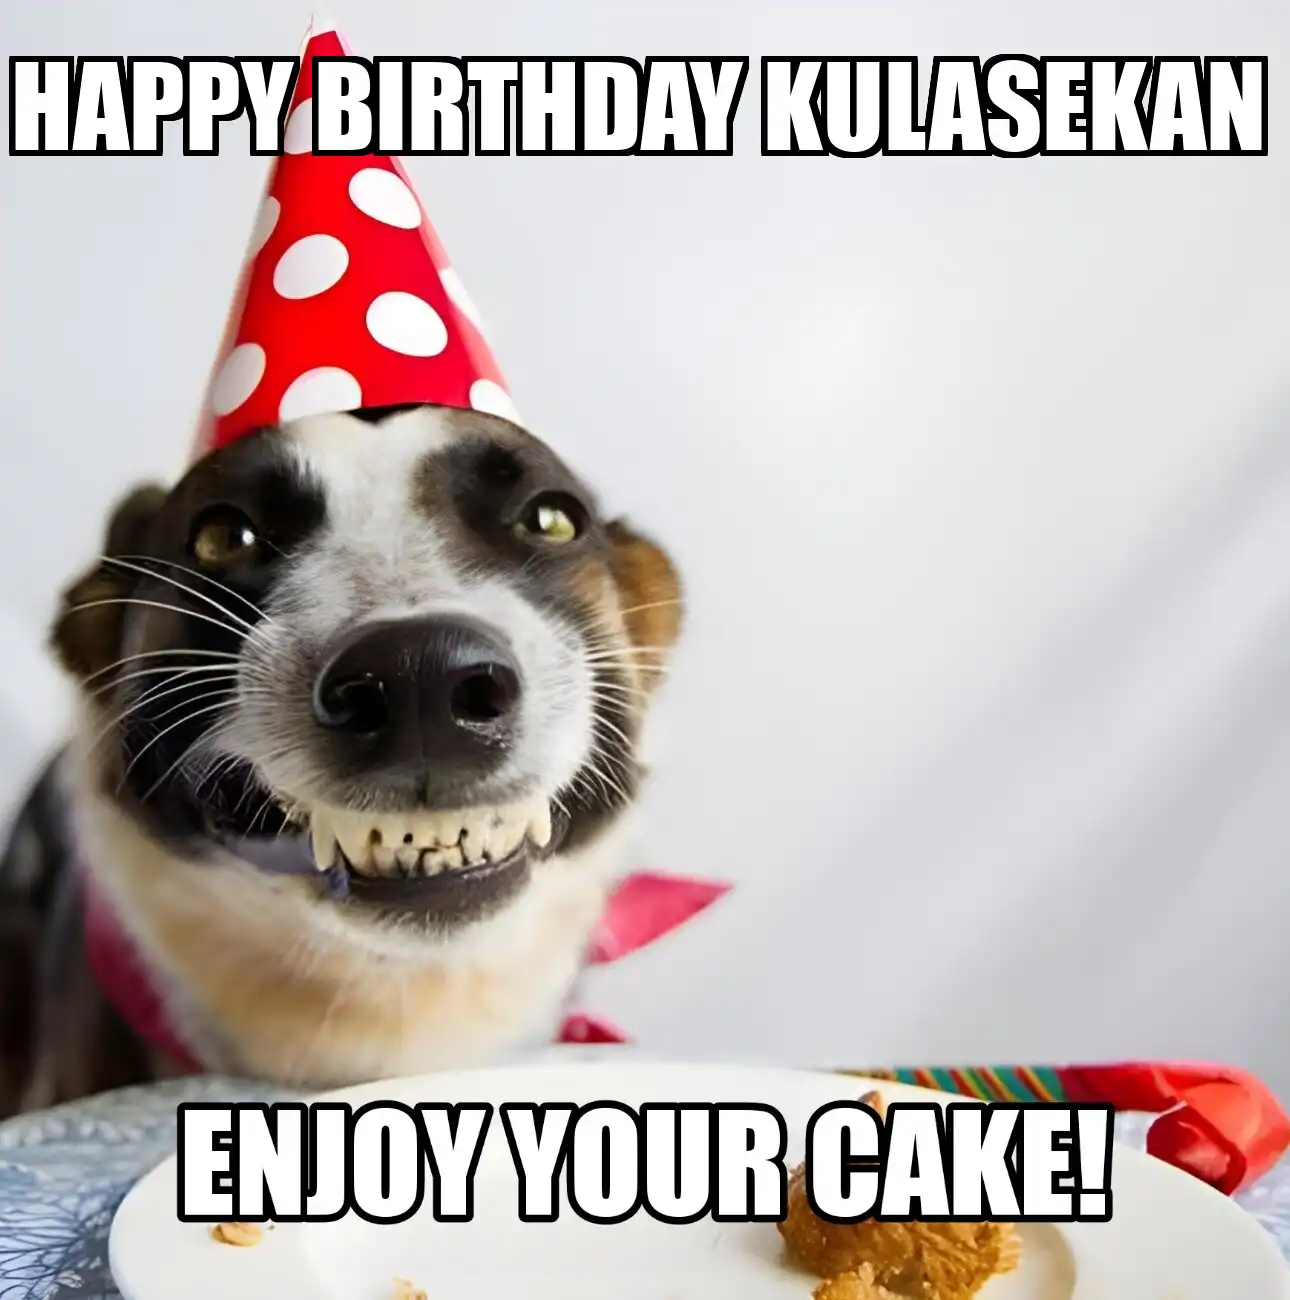 Happy Birthday Kulasekan Enjoy Your Cake Dog Meme